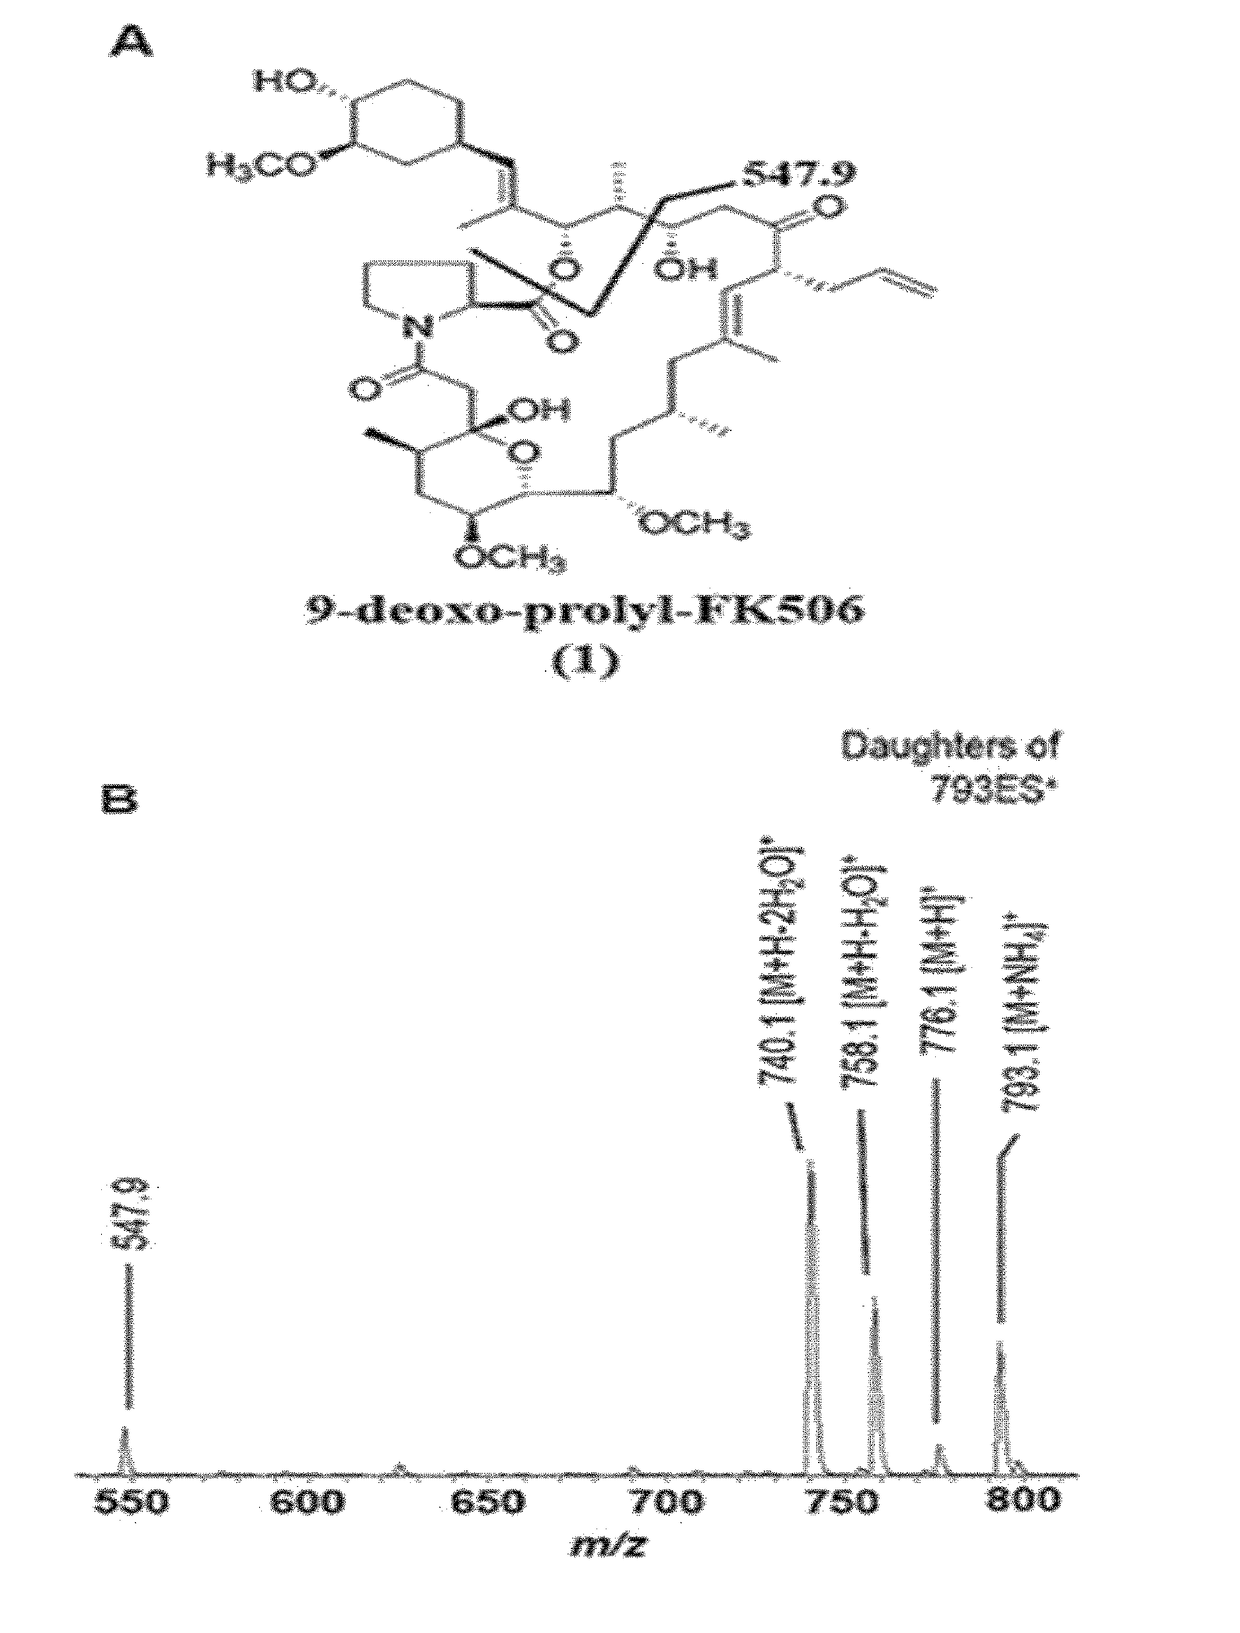 Fk506 derivative maintaining nerve regeneration activity without immunosuppressive activity, and use thereof